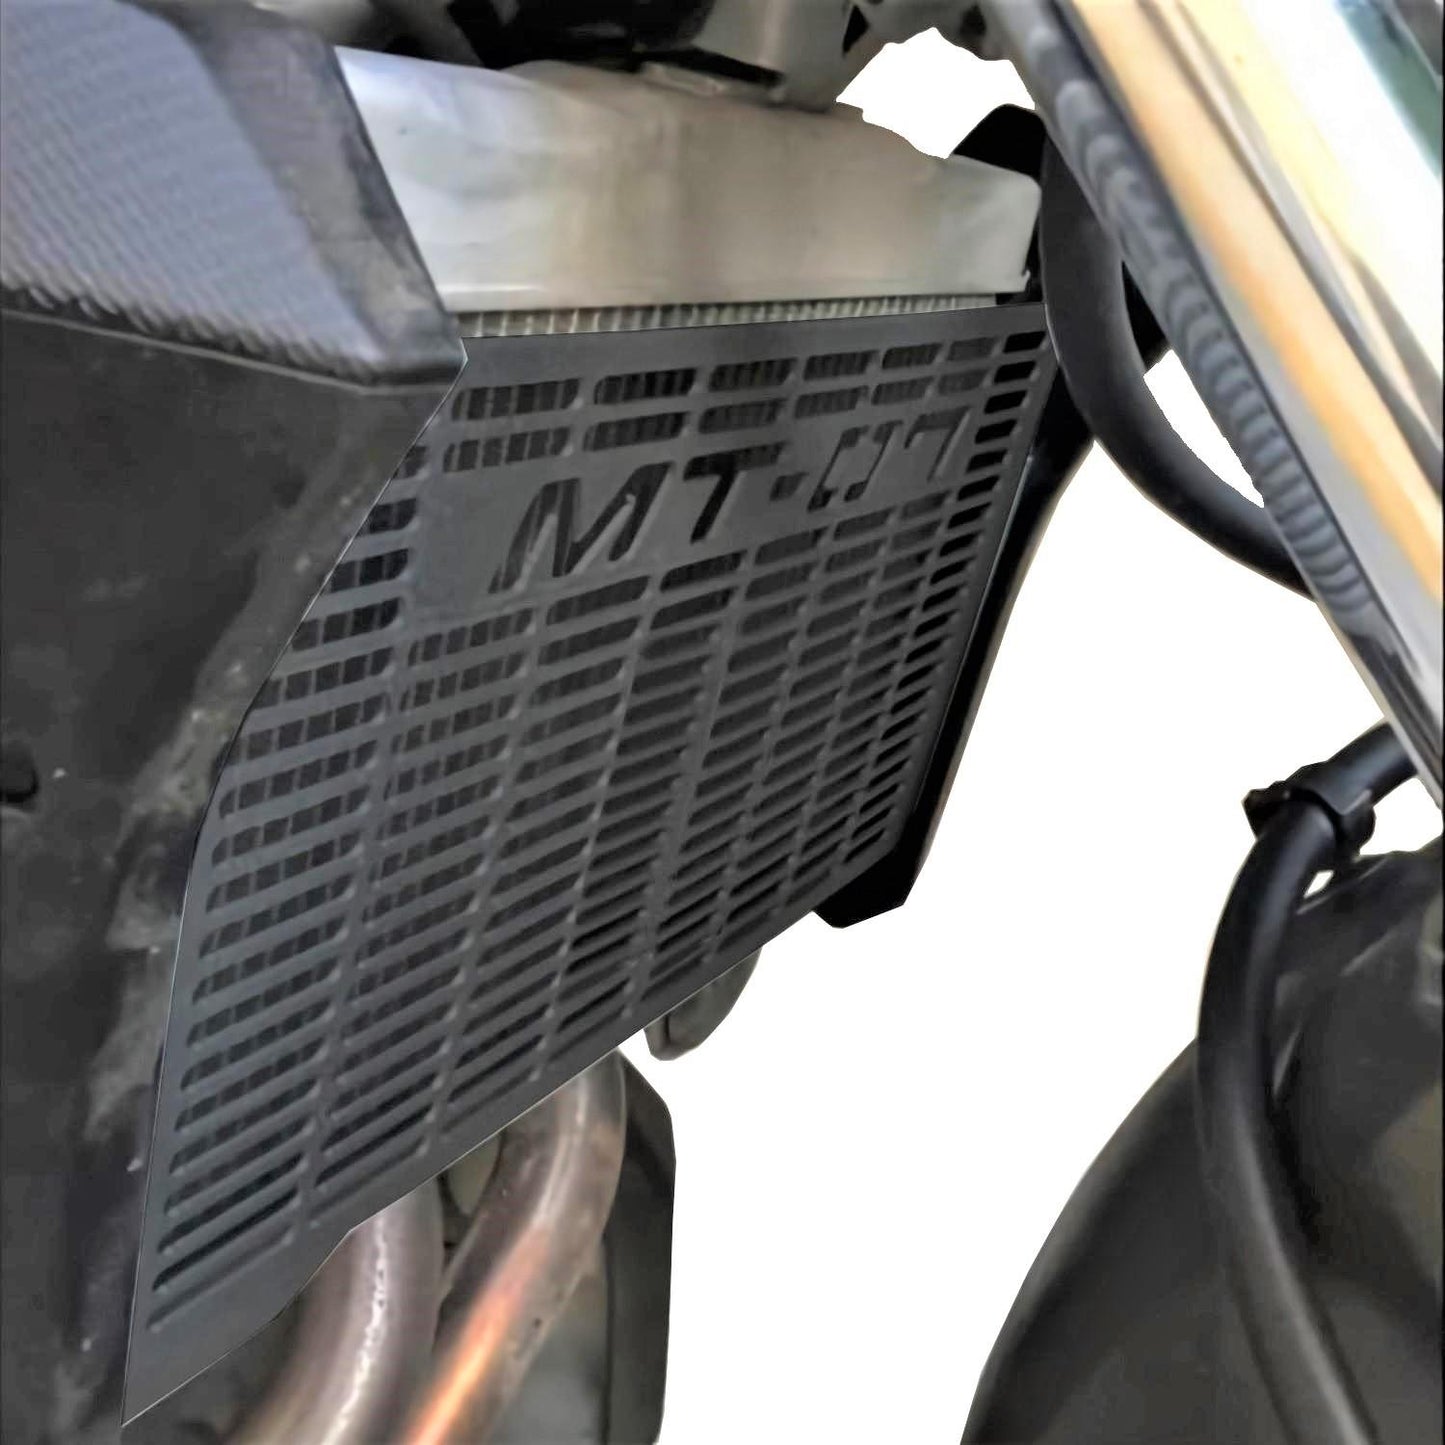 Yamaha MT07 radiator guard aluminum 14-23